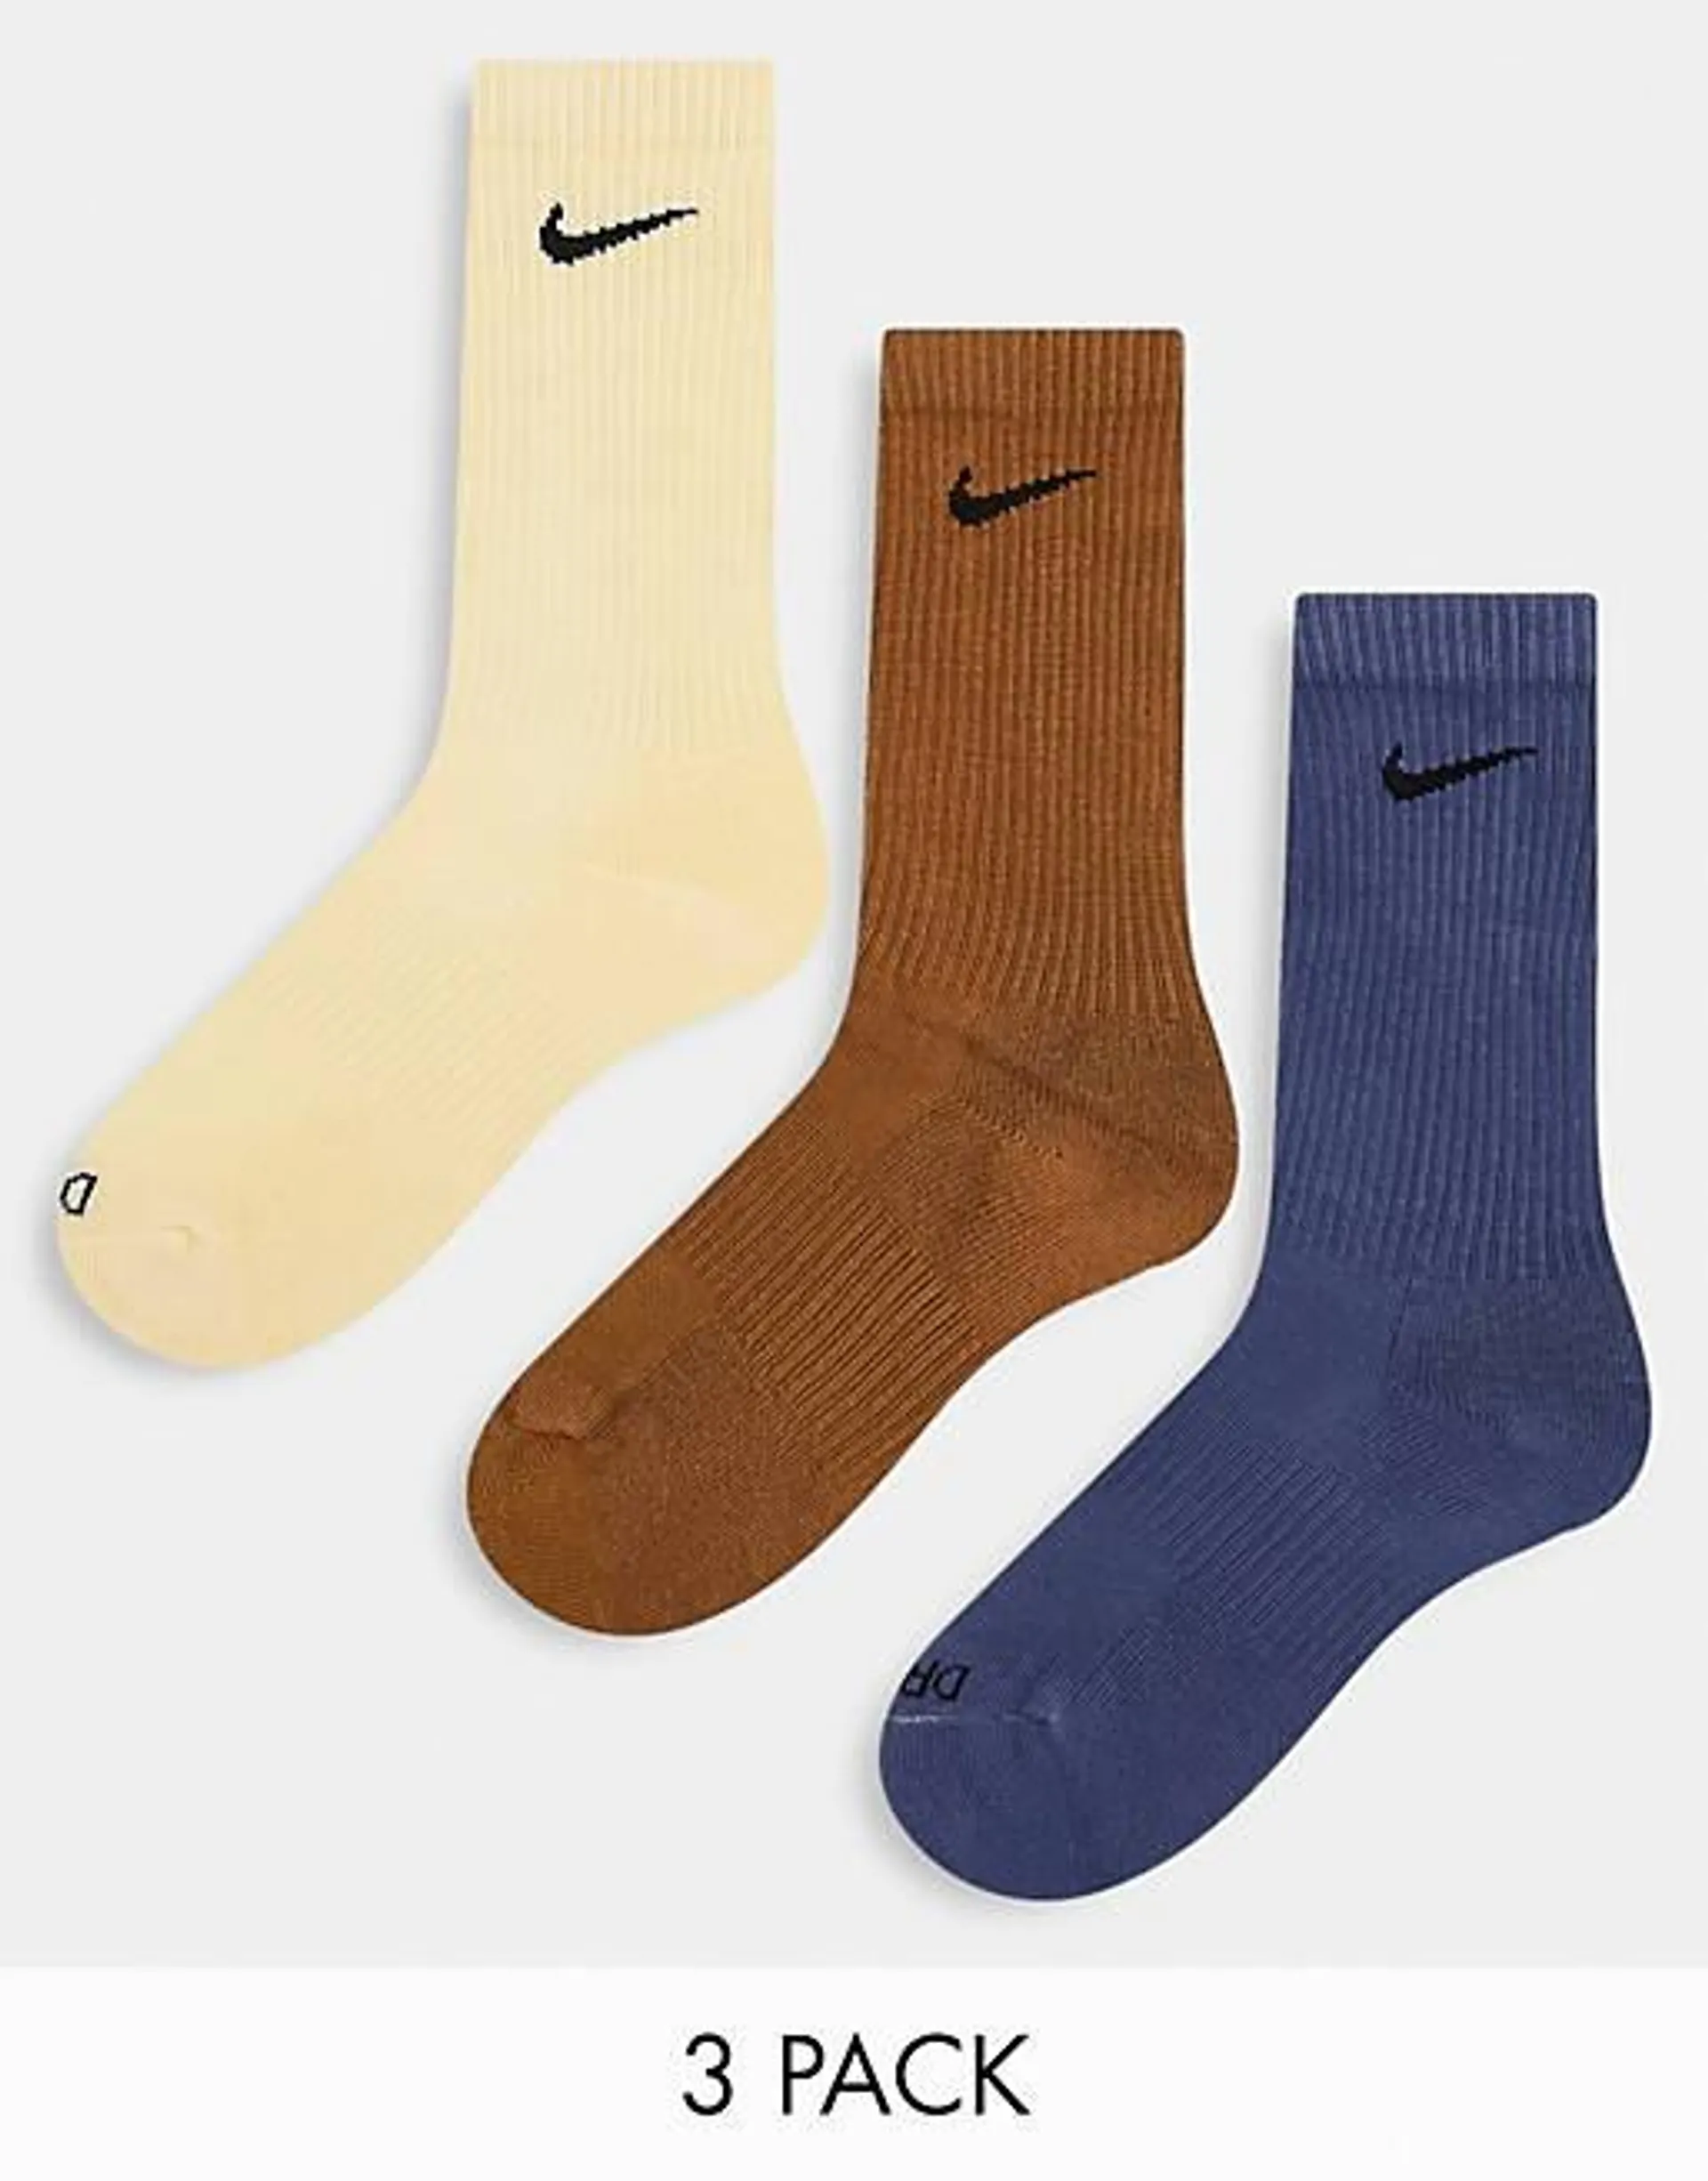 Nike Training 3pk crew socks in blue and stone